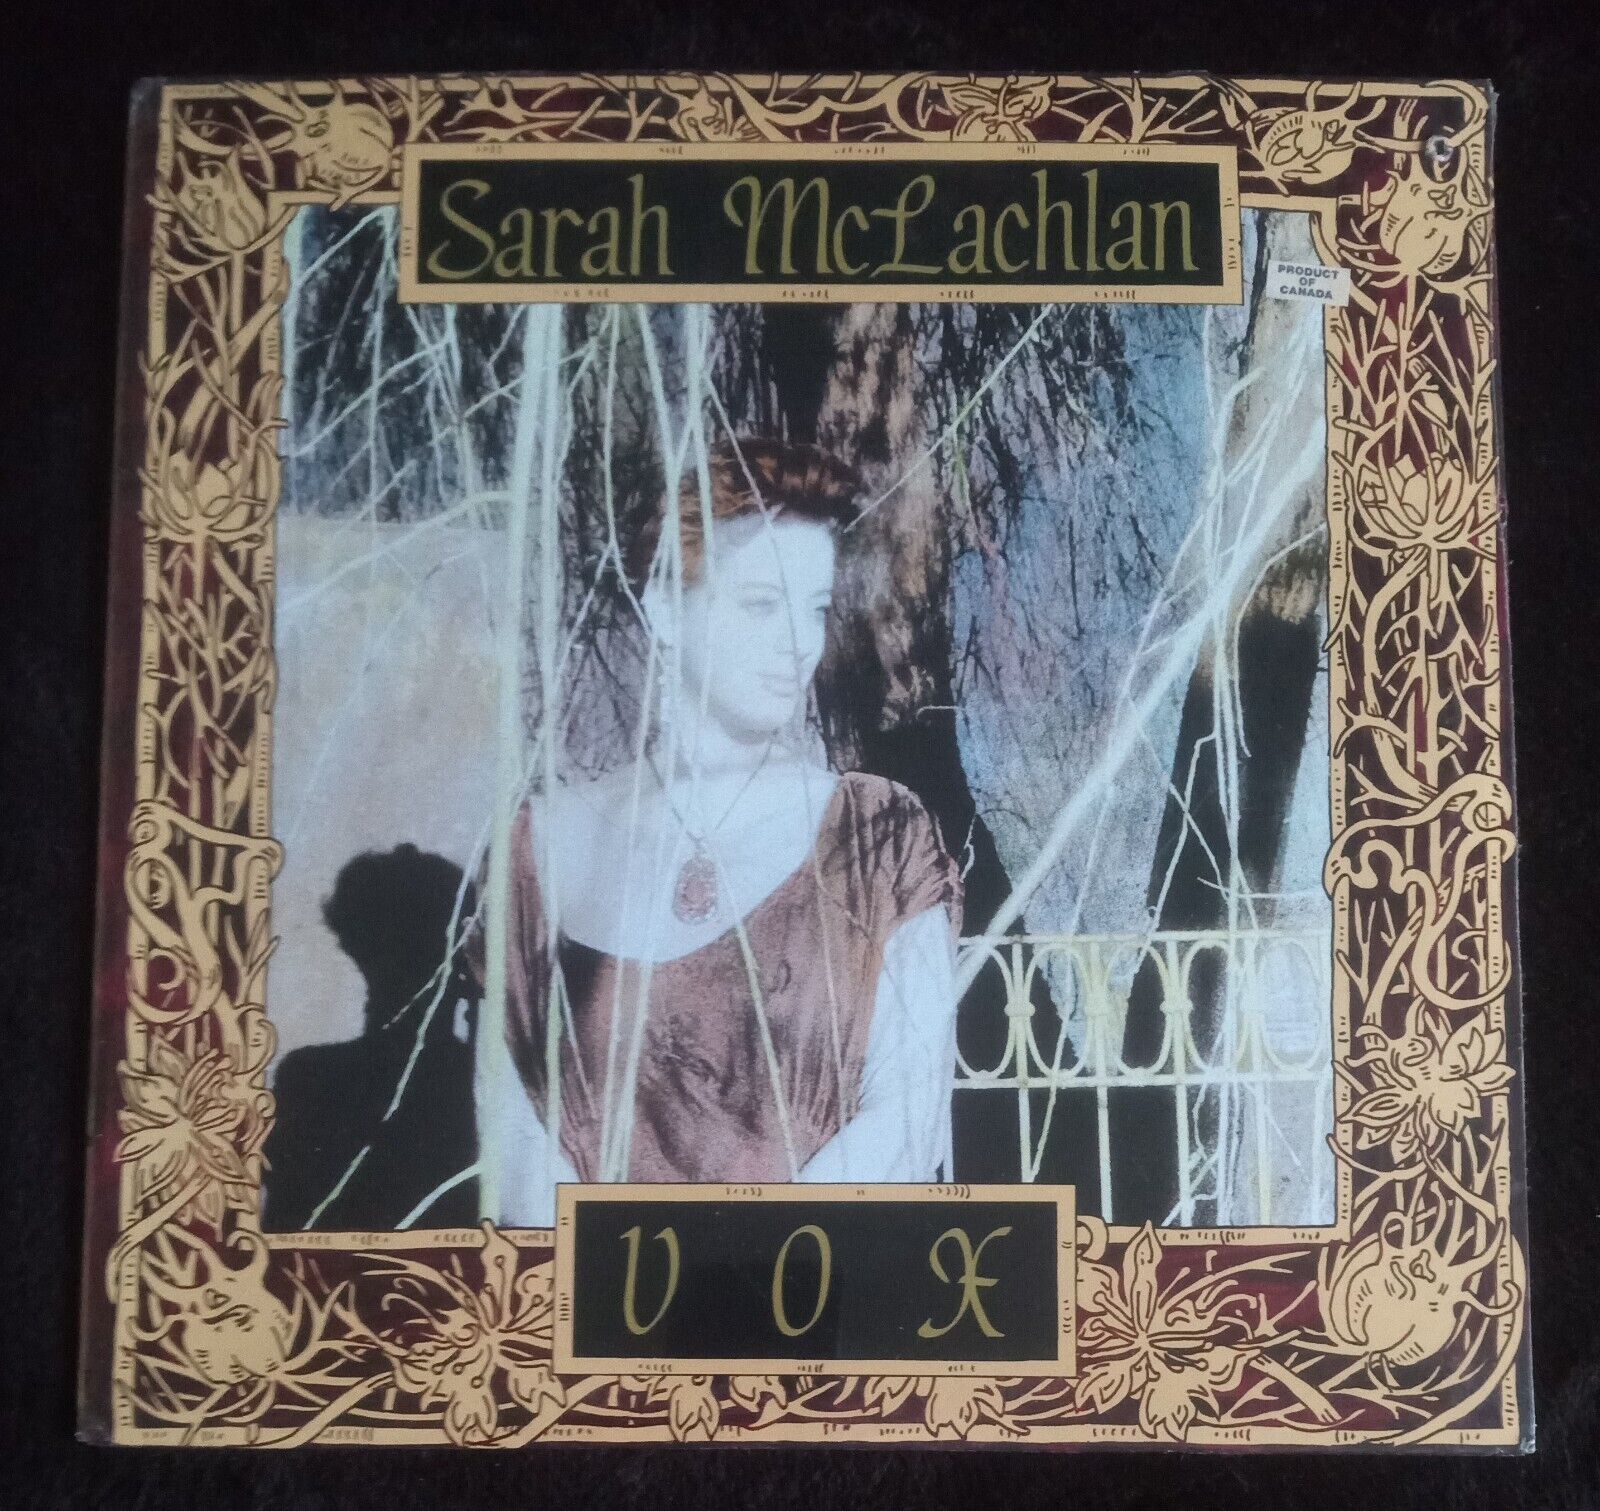 SARAH McLACHLAN - Vox (1989 Capitol) Vinyl 12" Single - NEW